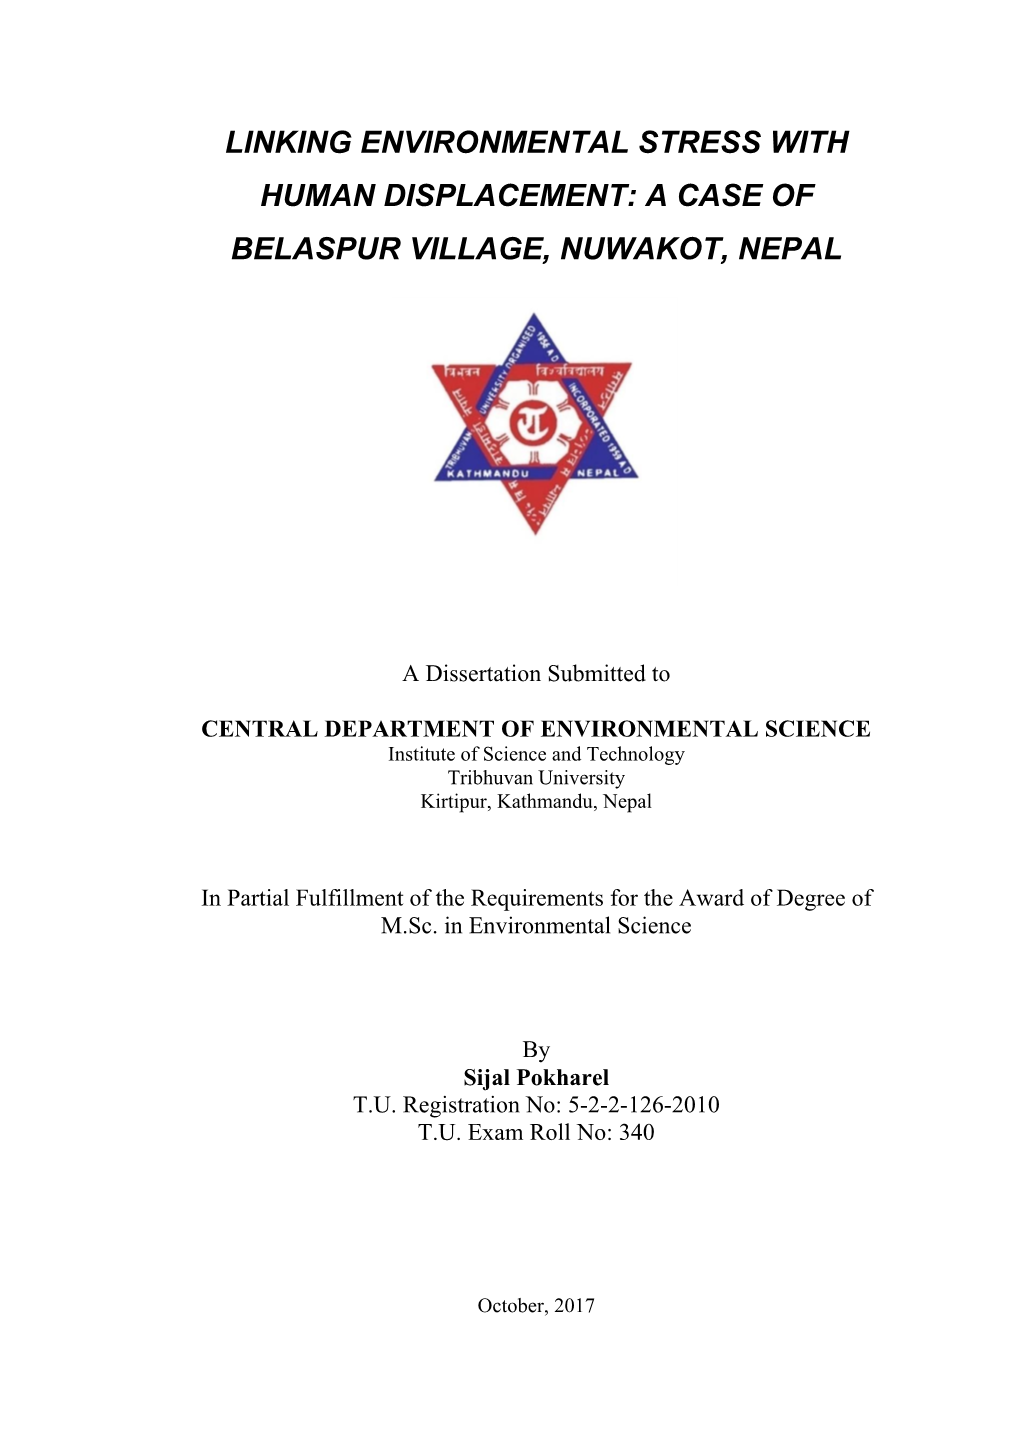 A Case of Belaspur Village, Nuwakot, Nepal